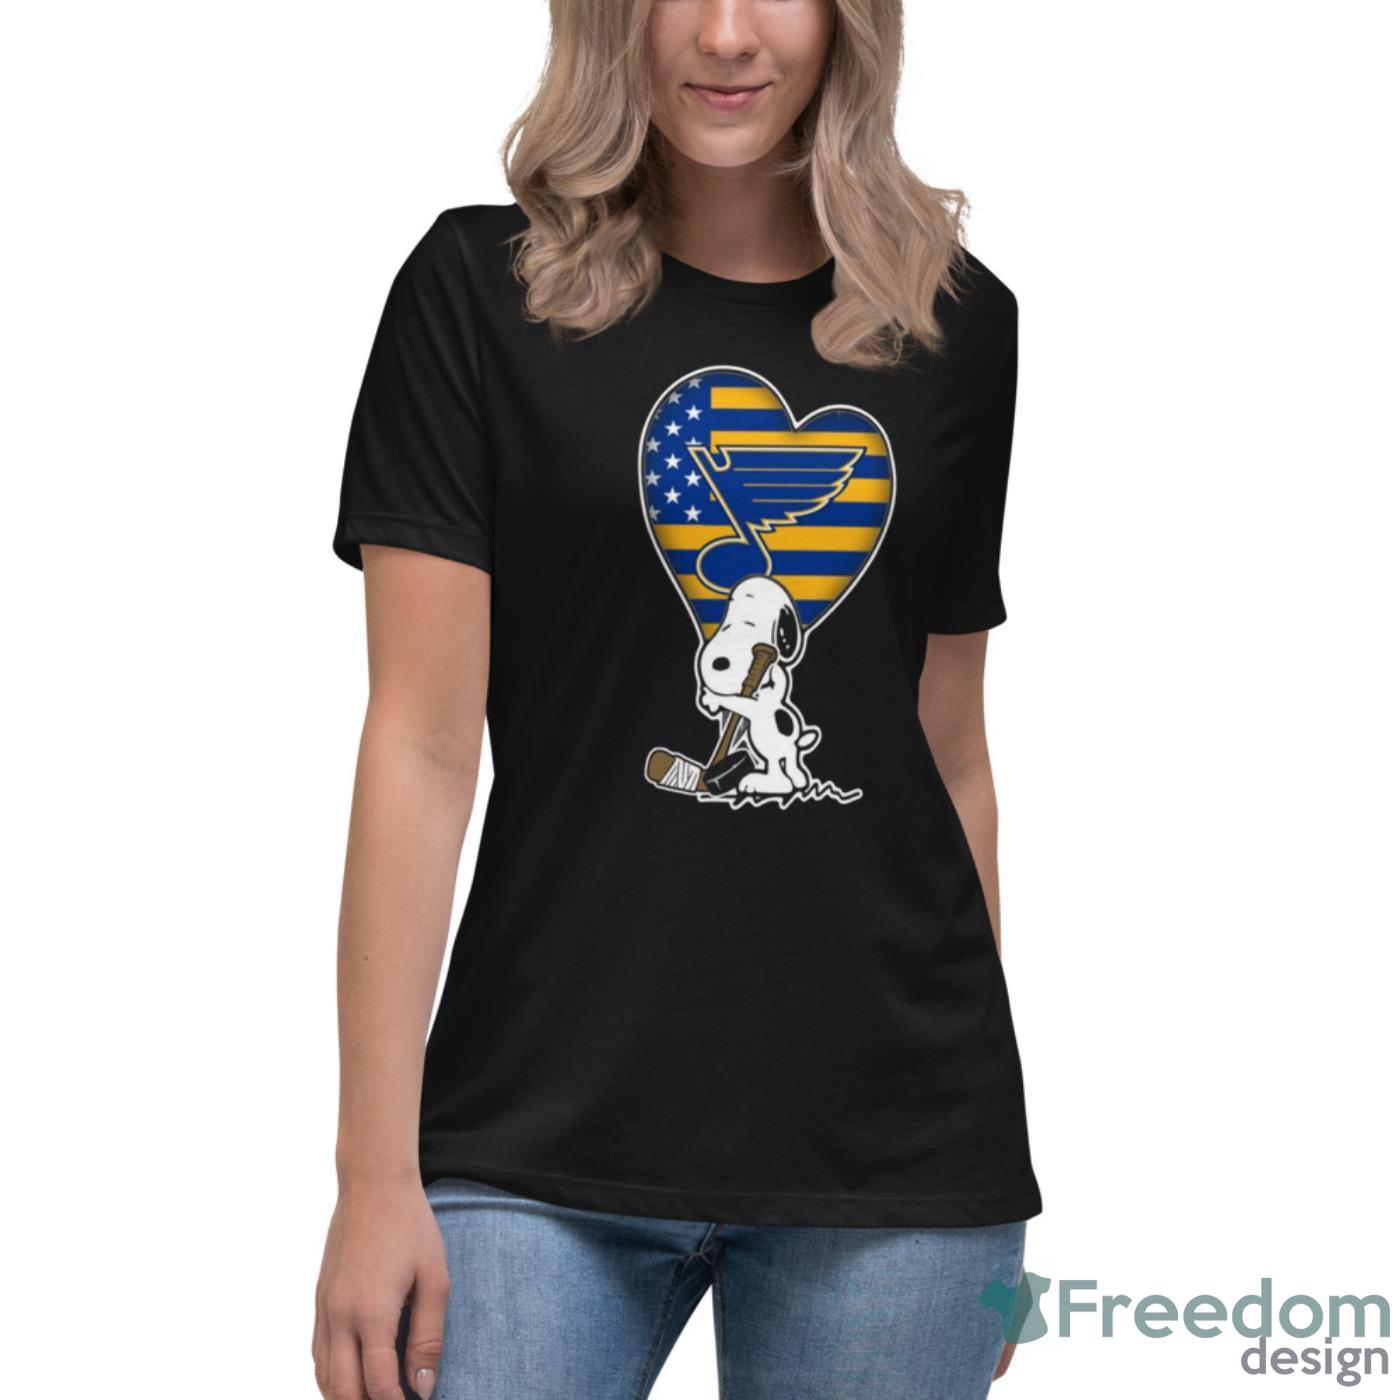 St. Louis Blues NHL Hawaiian Shirt For Men And Women Fans - Freedomdesign